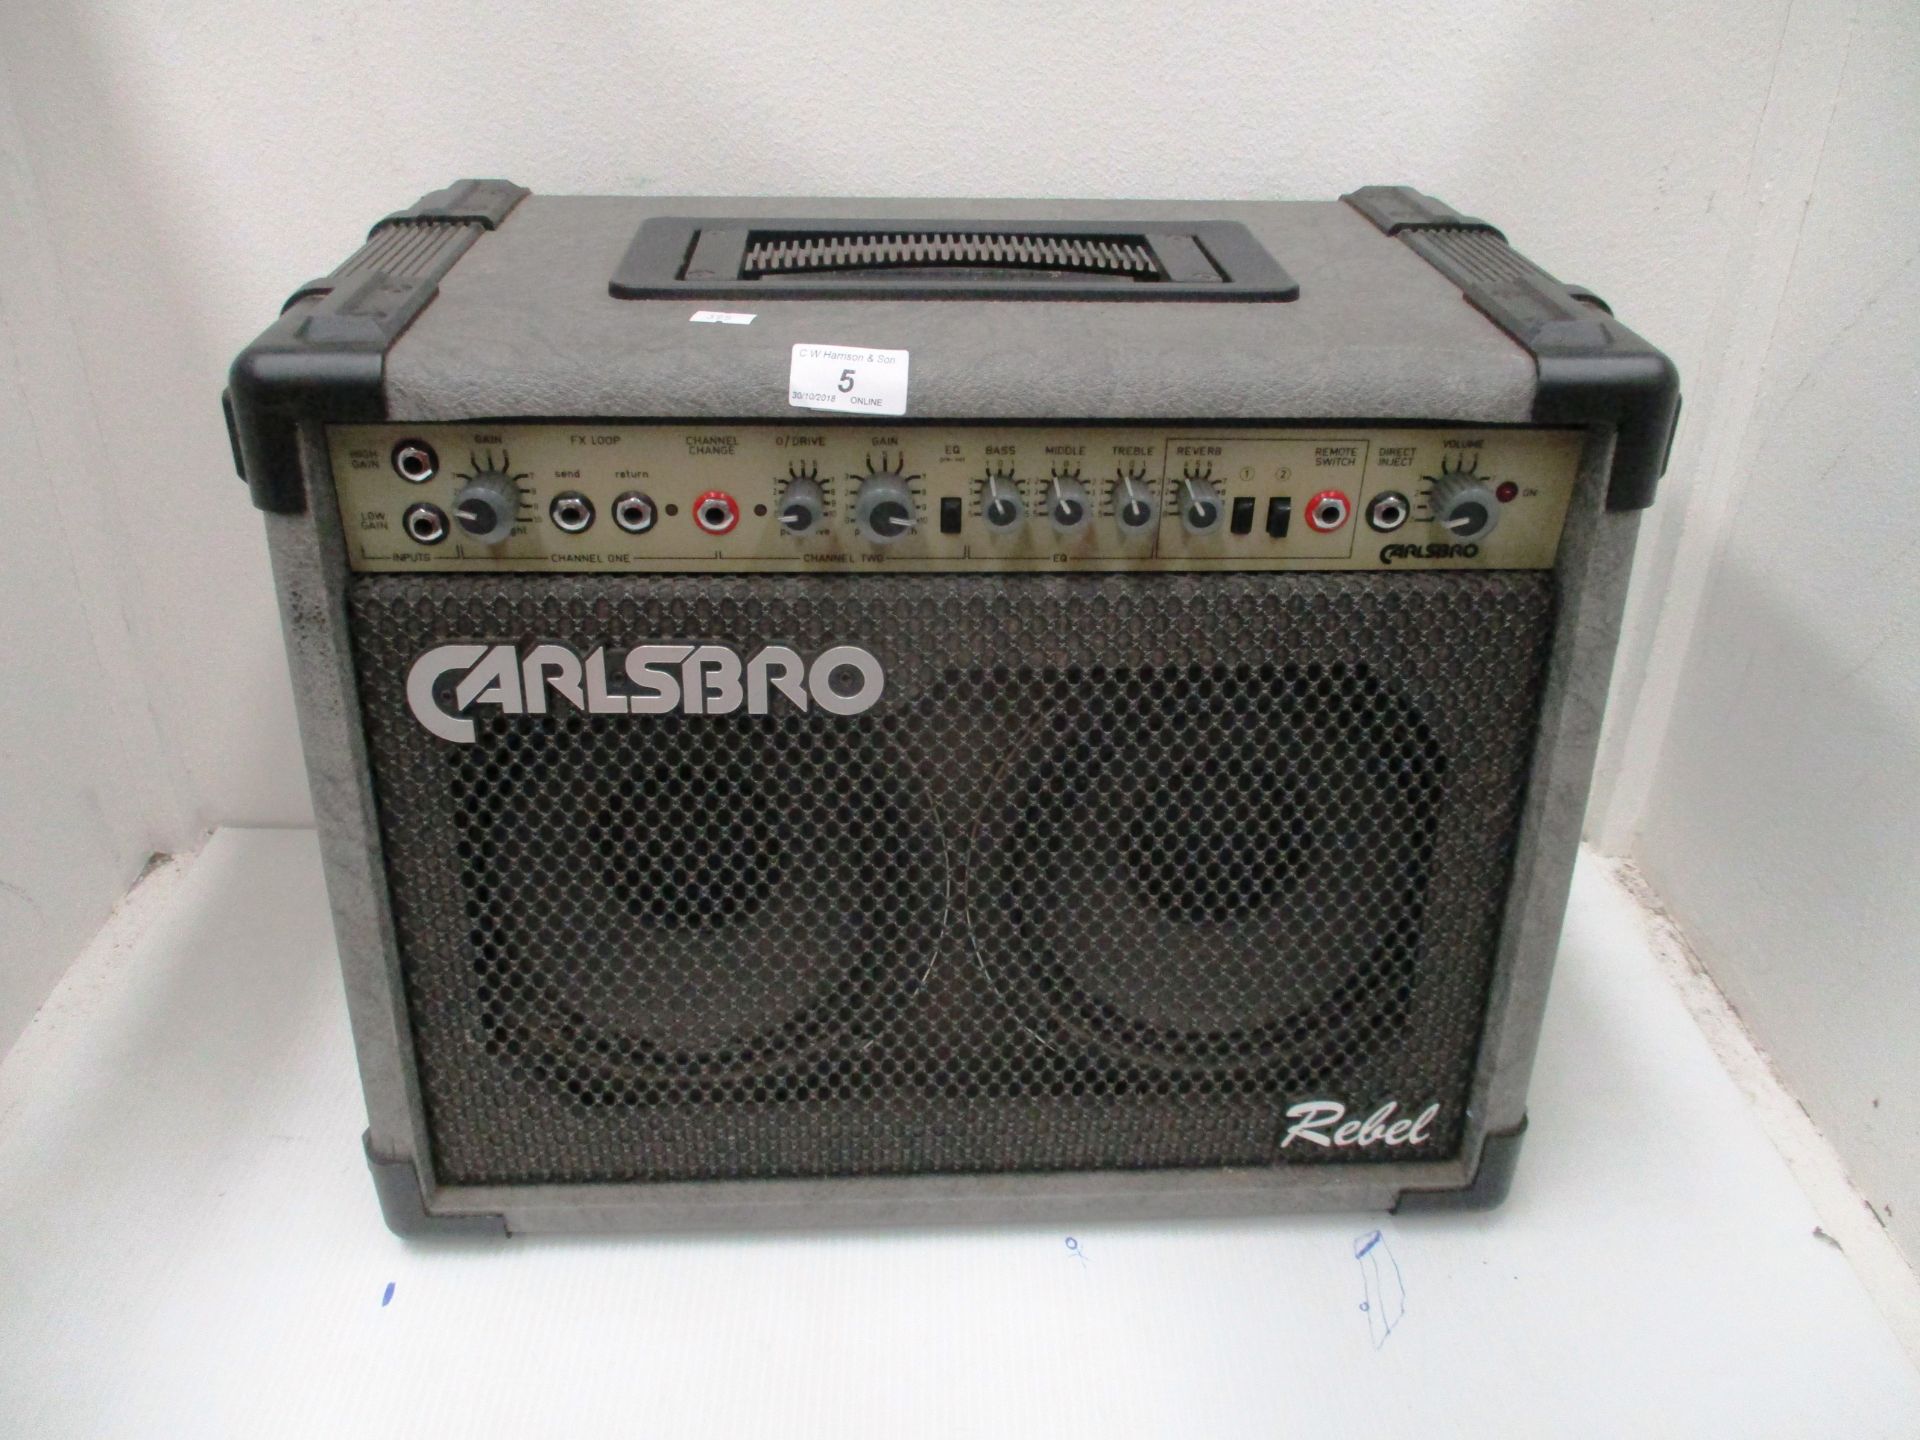 Carlsbro vintage 'Rebel' amp